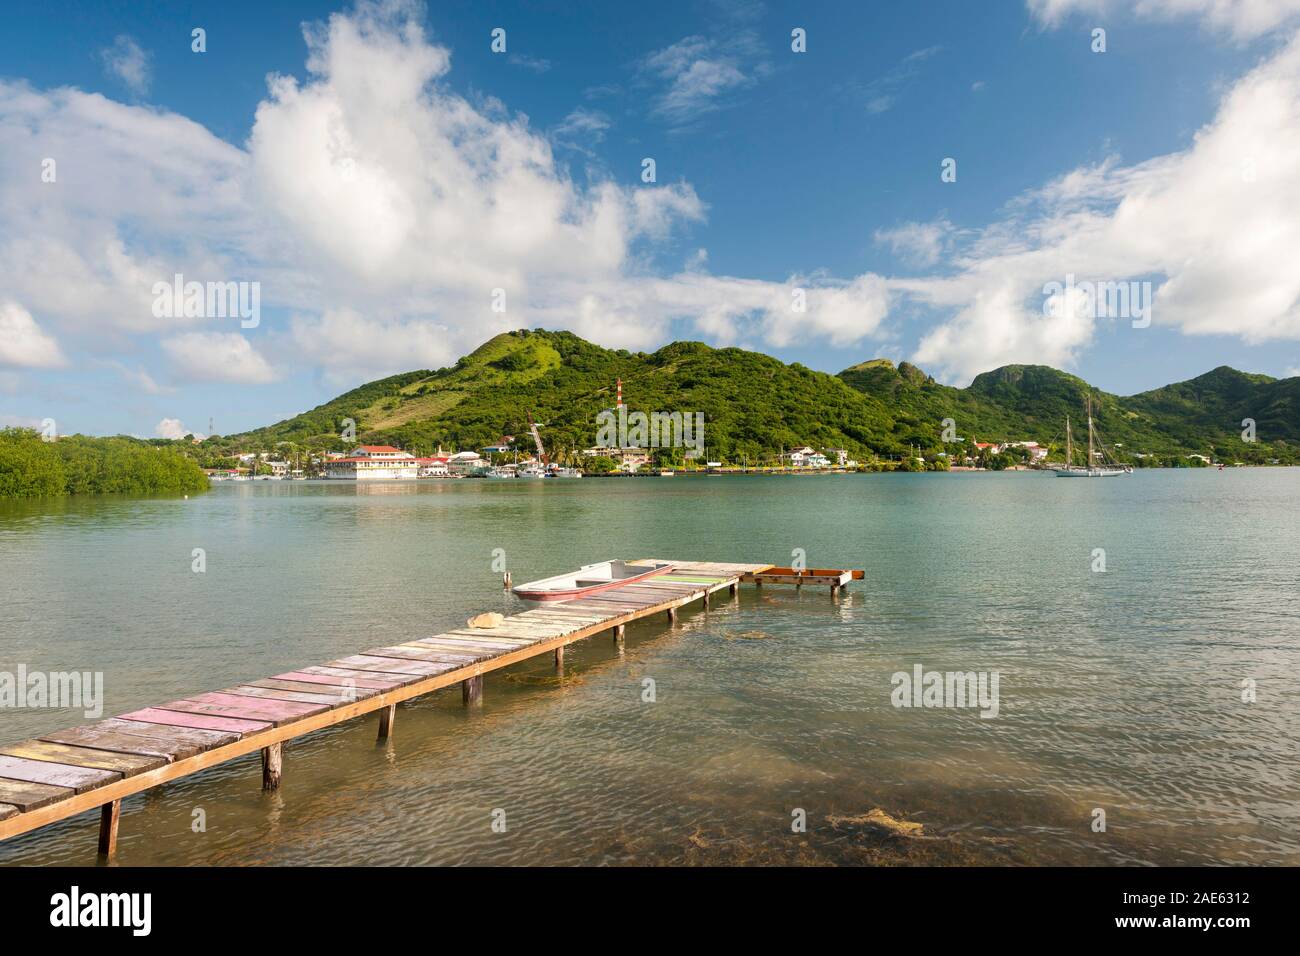 View of Providencia island from Santa Catalina island in Colombia. Stock Photo